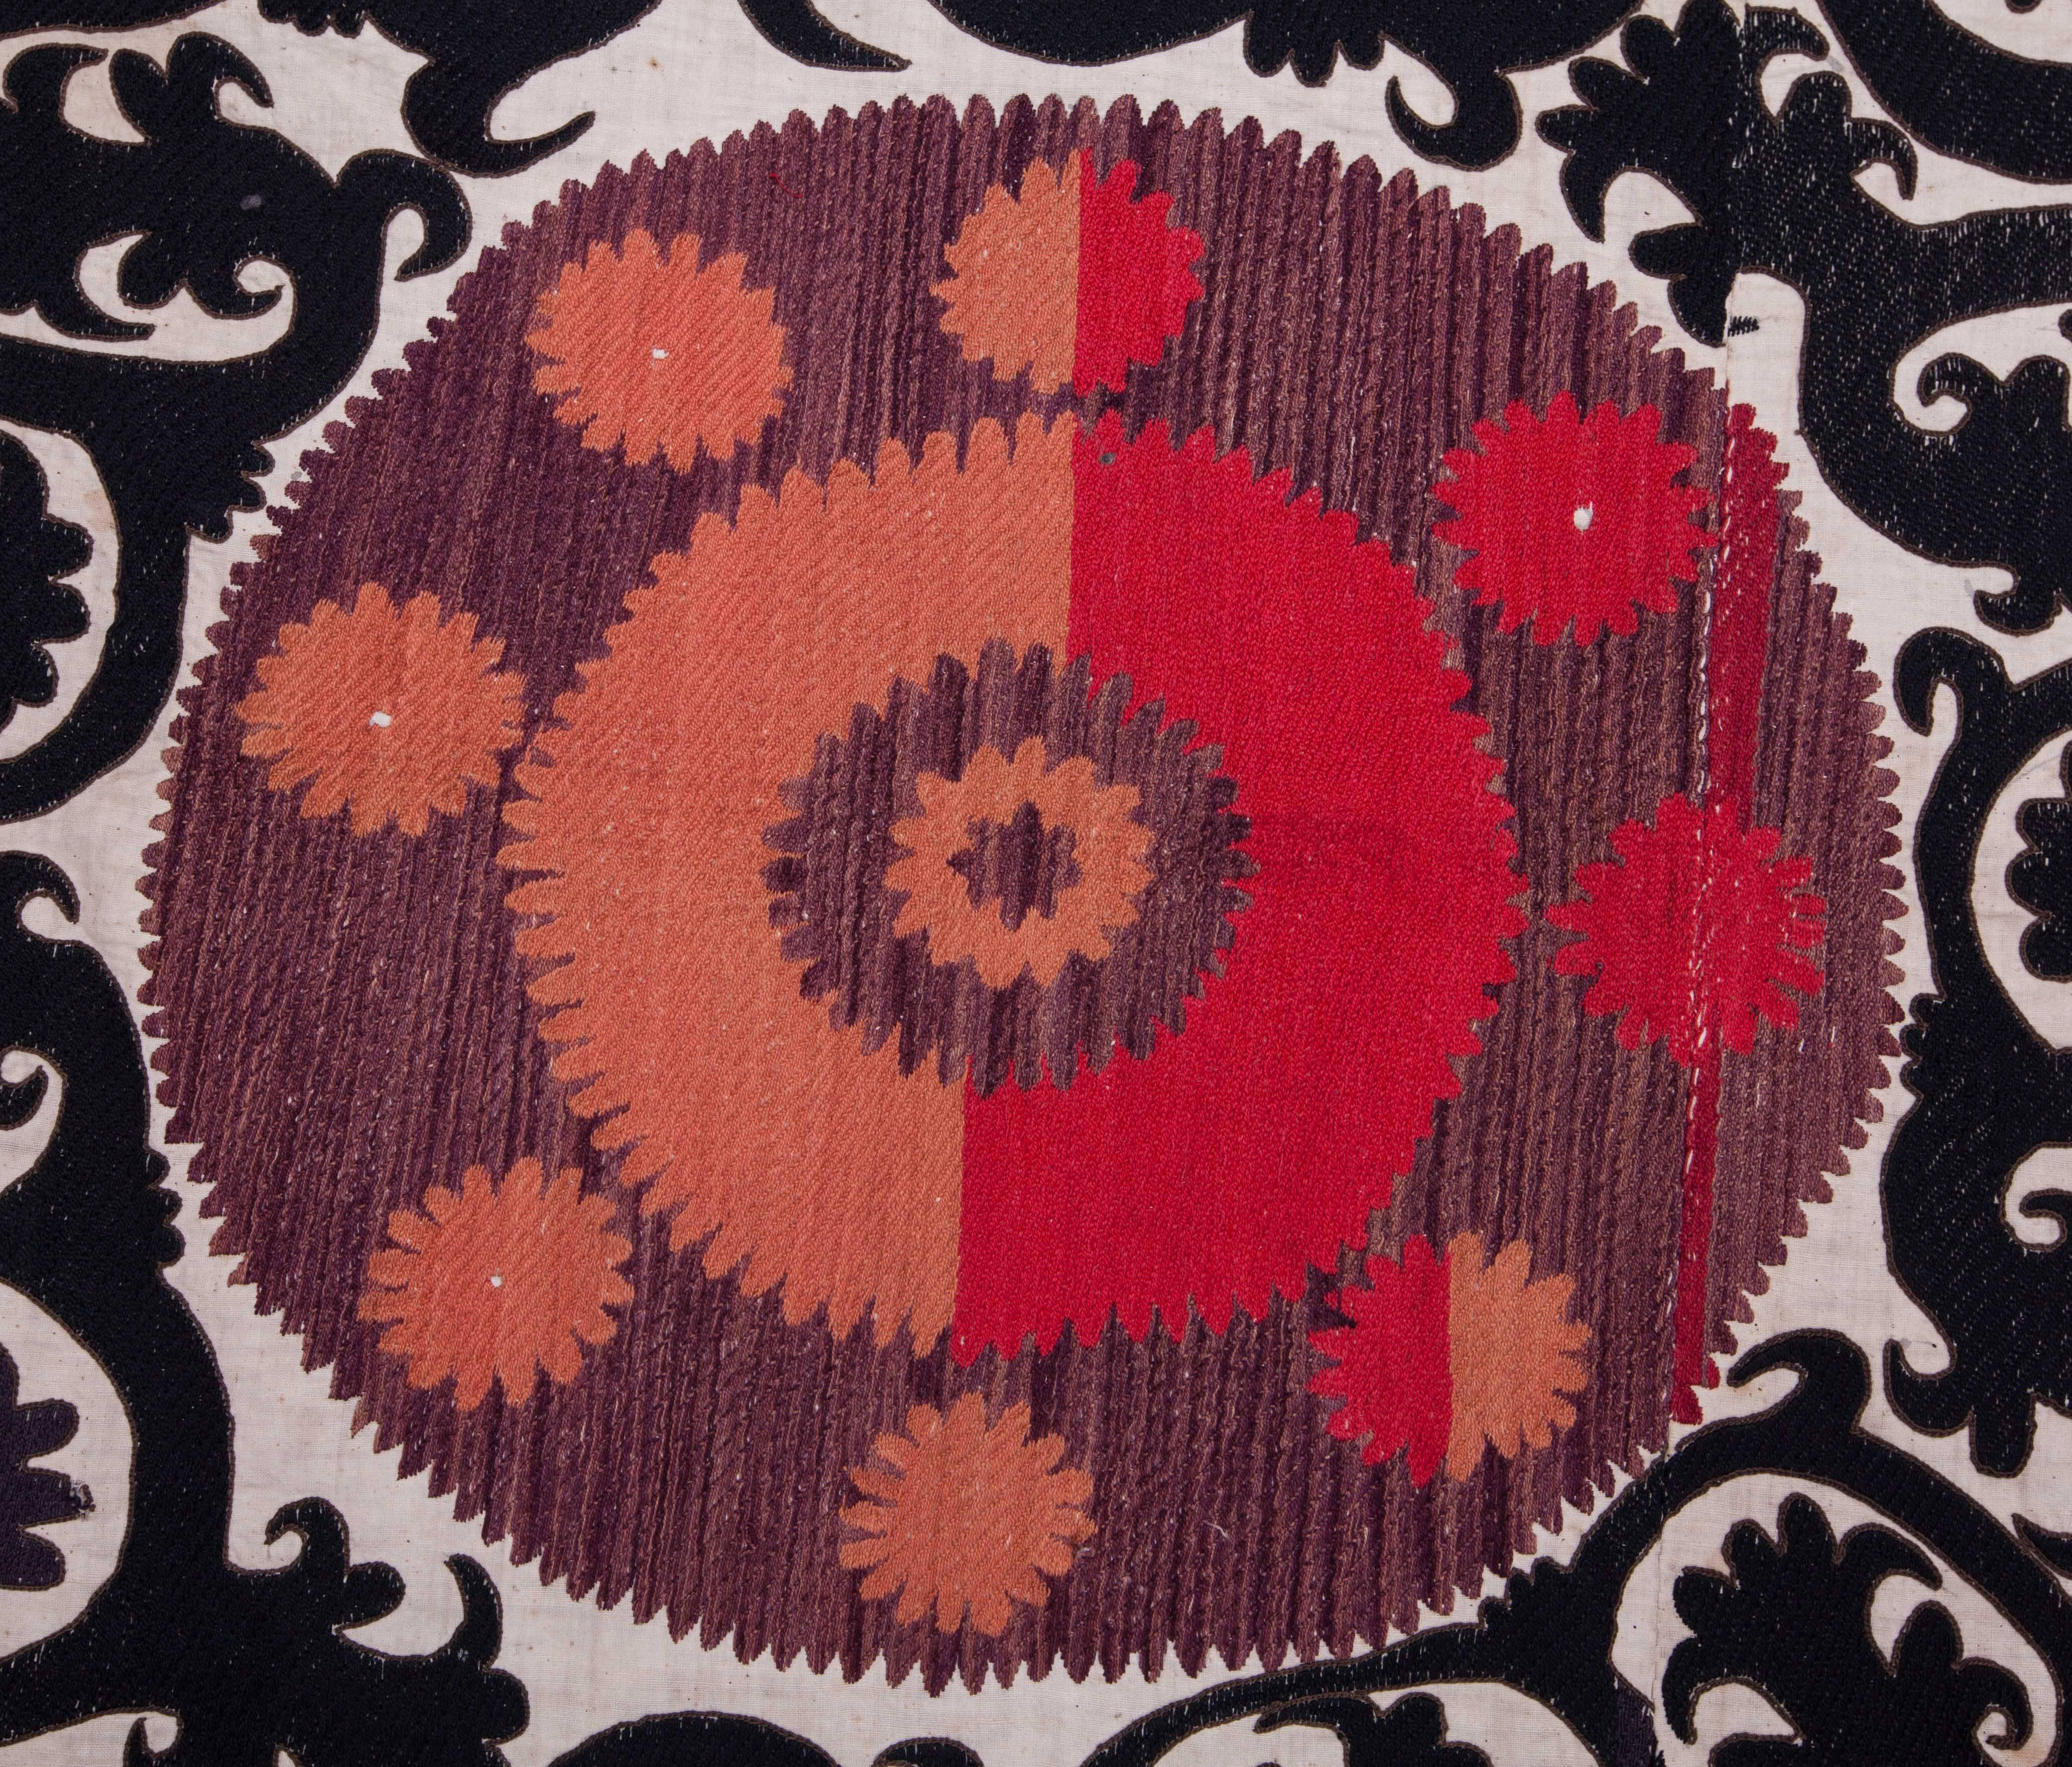 Embroidered Early 20th Century Samarkand Suzani from Uzbekistan, Silk Embroidery on Cotton